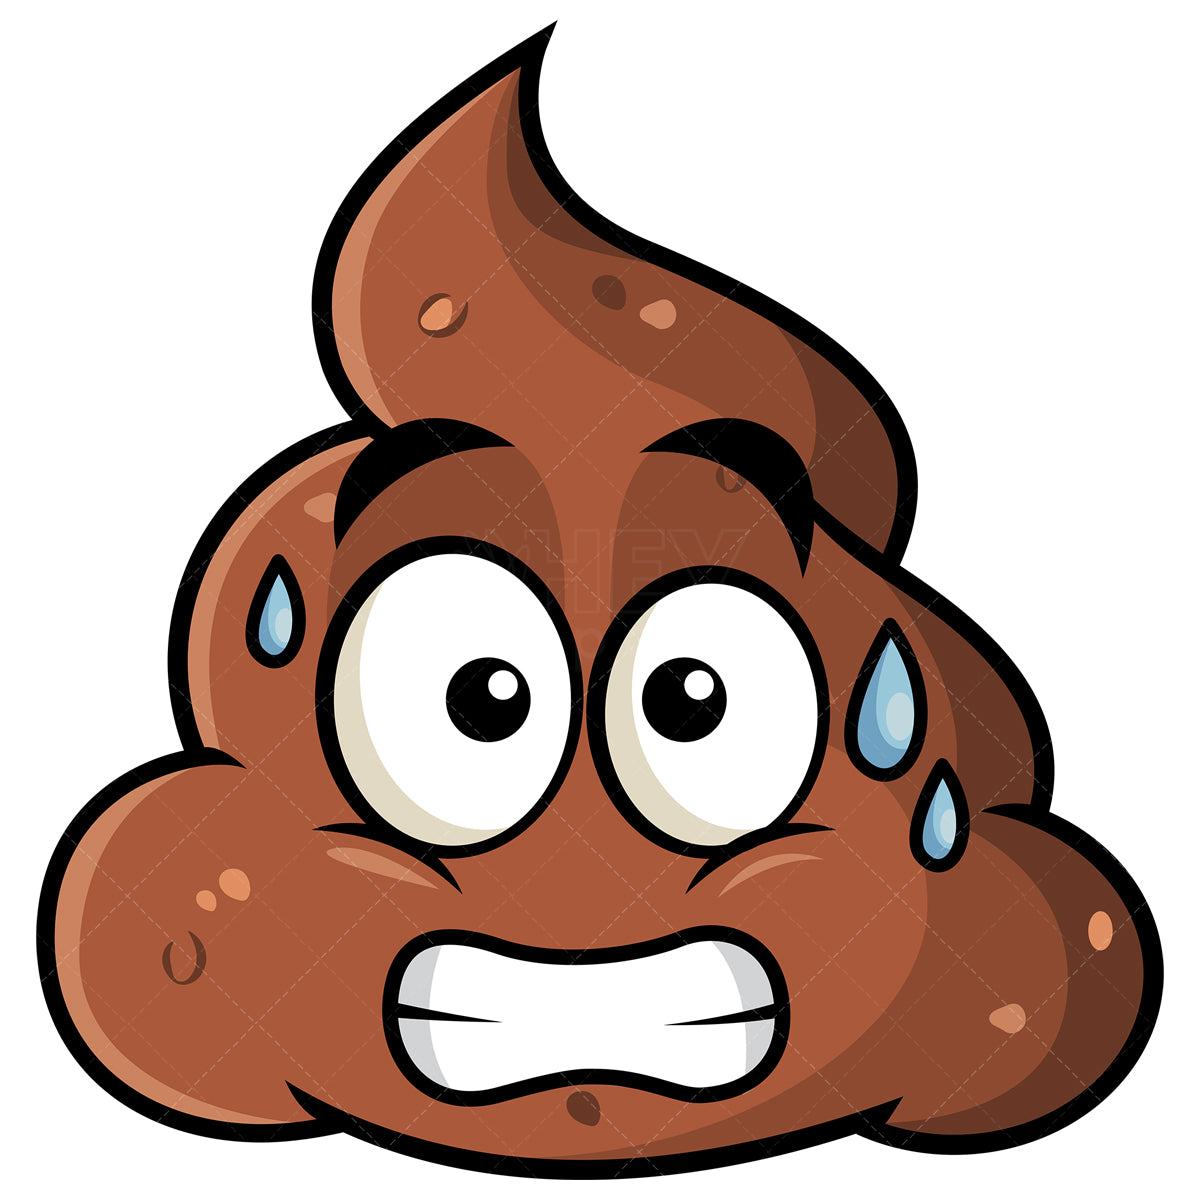 Royalty-free stock vector illustration of a sweating poop emoji.